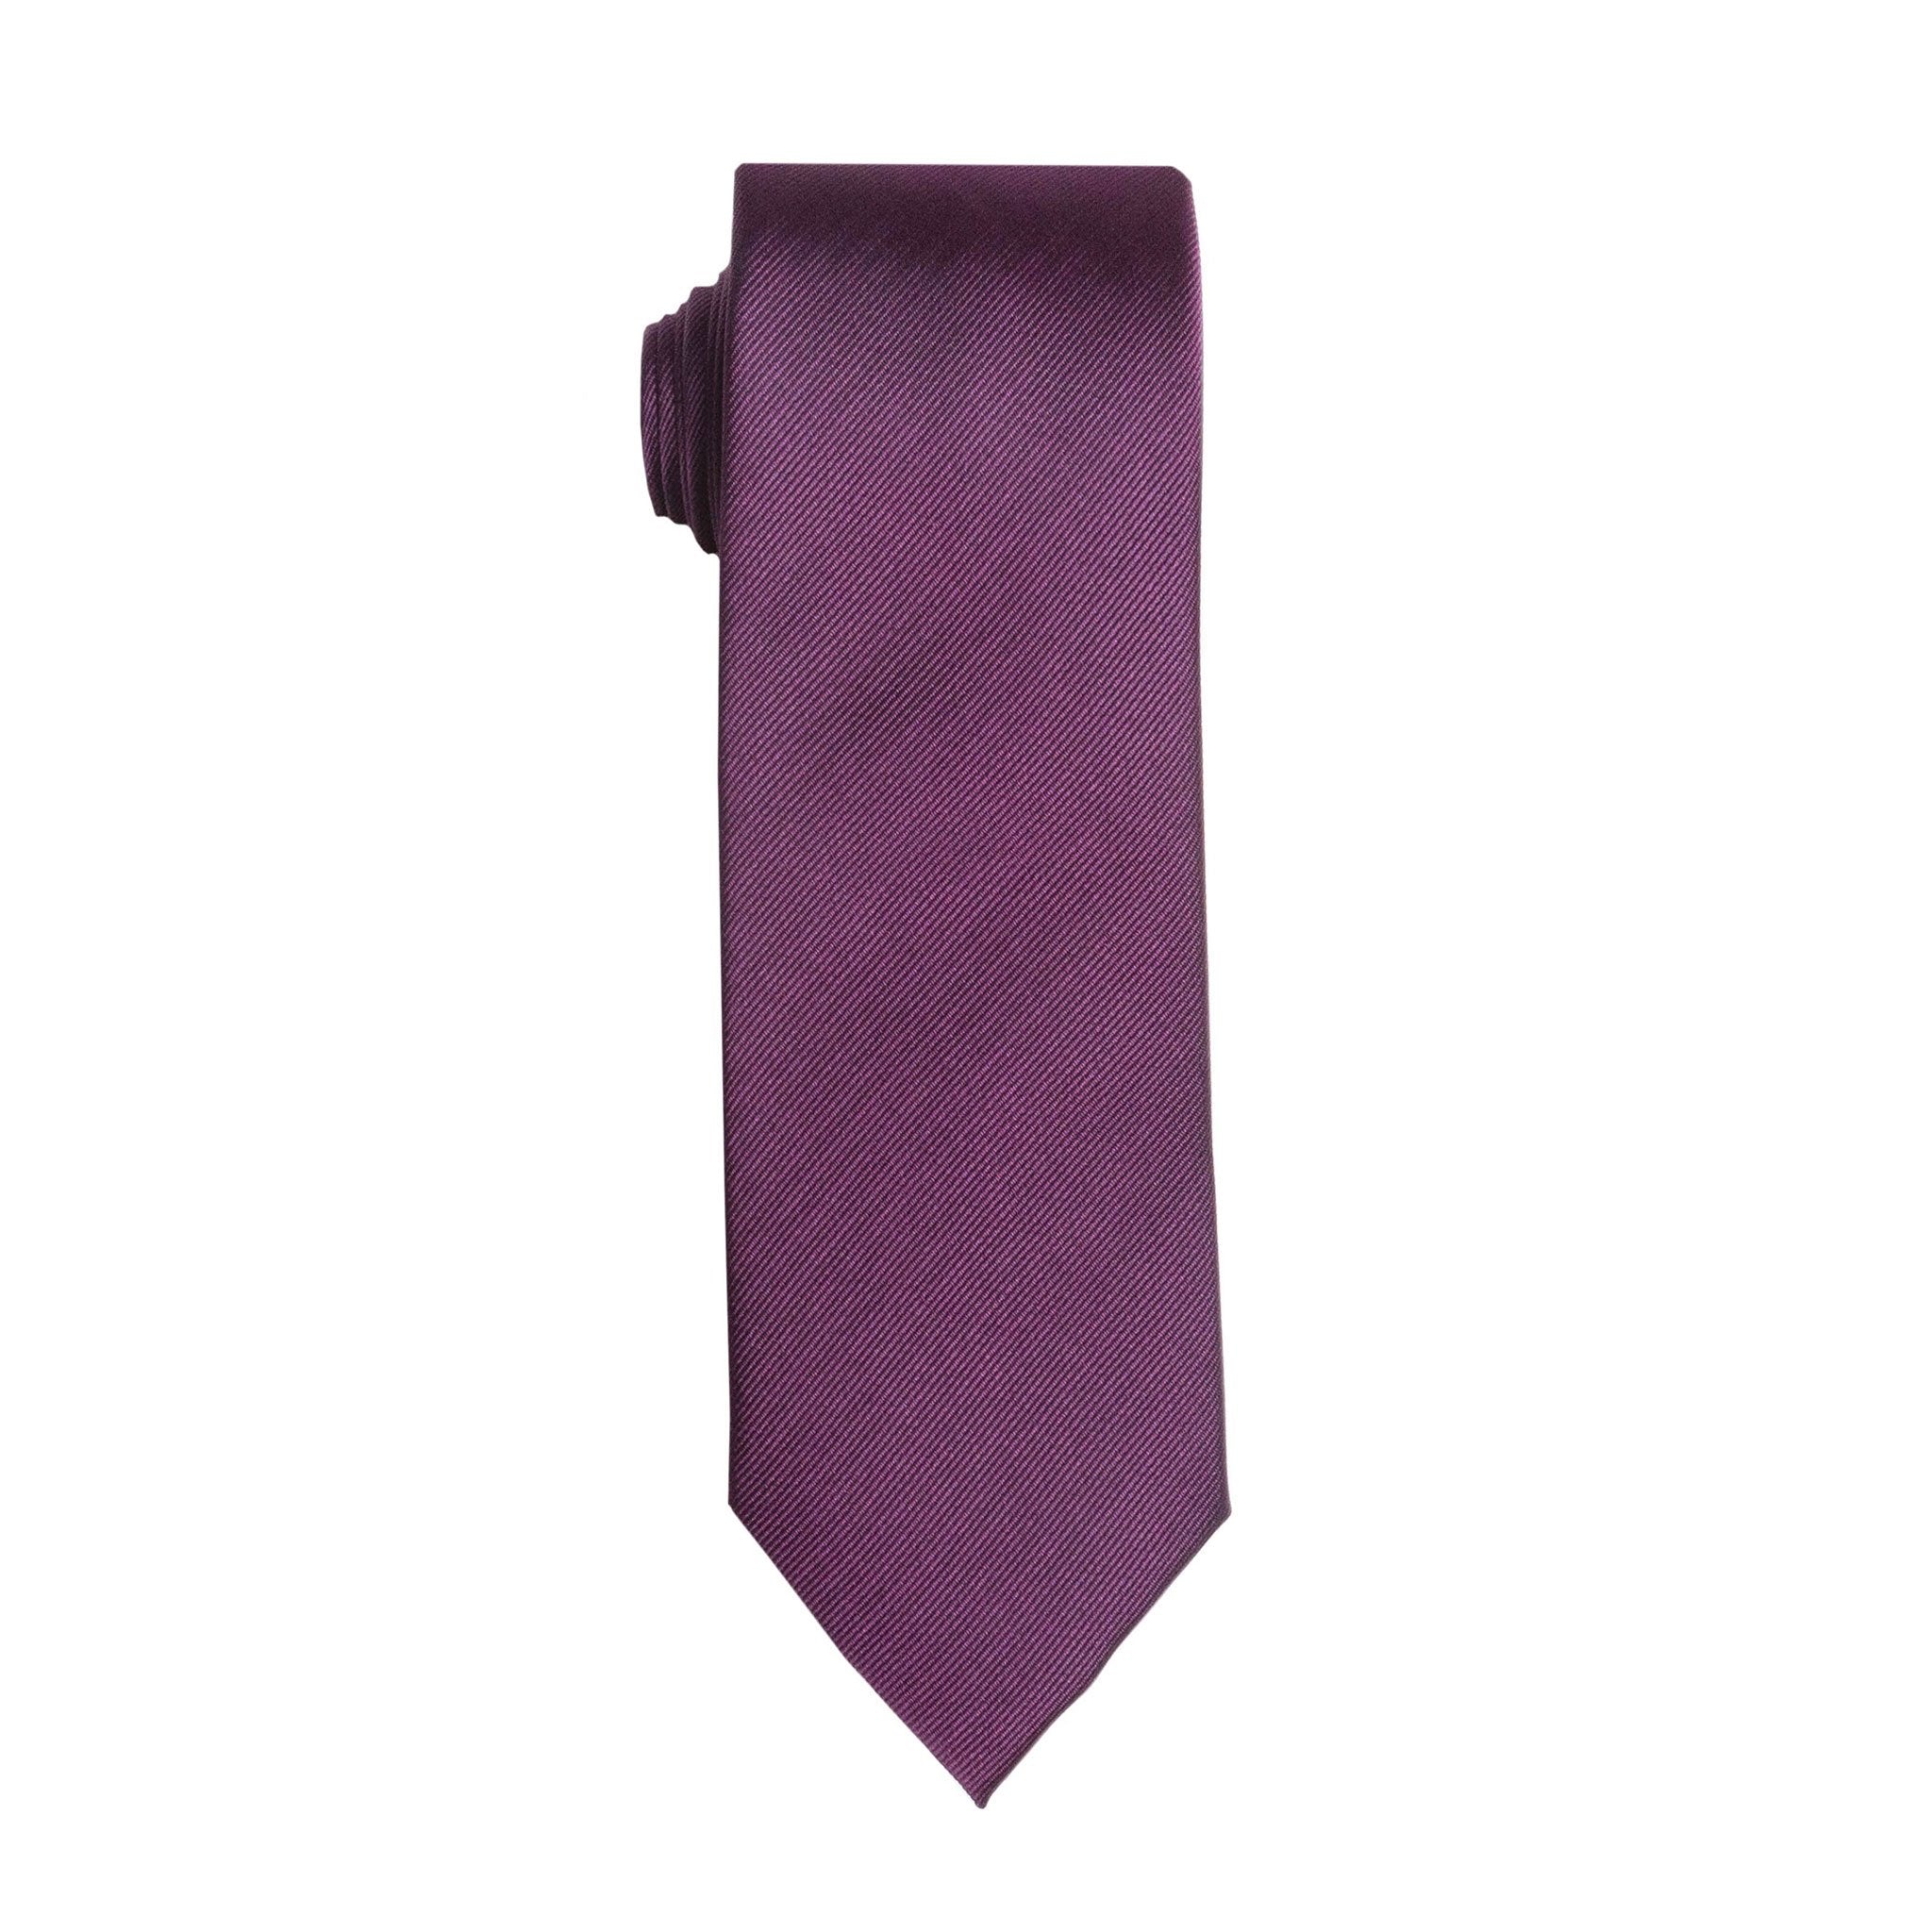 Solid Deep Purple Tie (Wall Street) - SprezzaBox